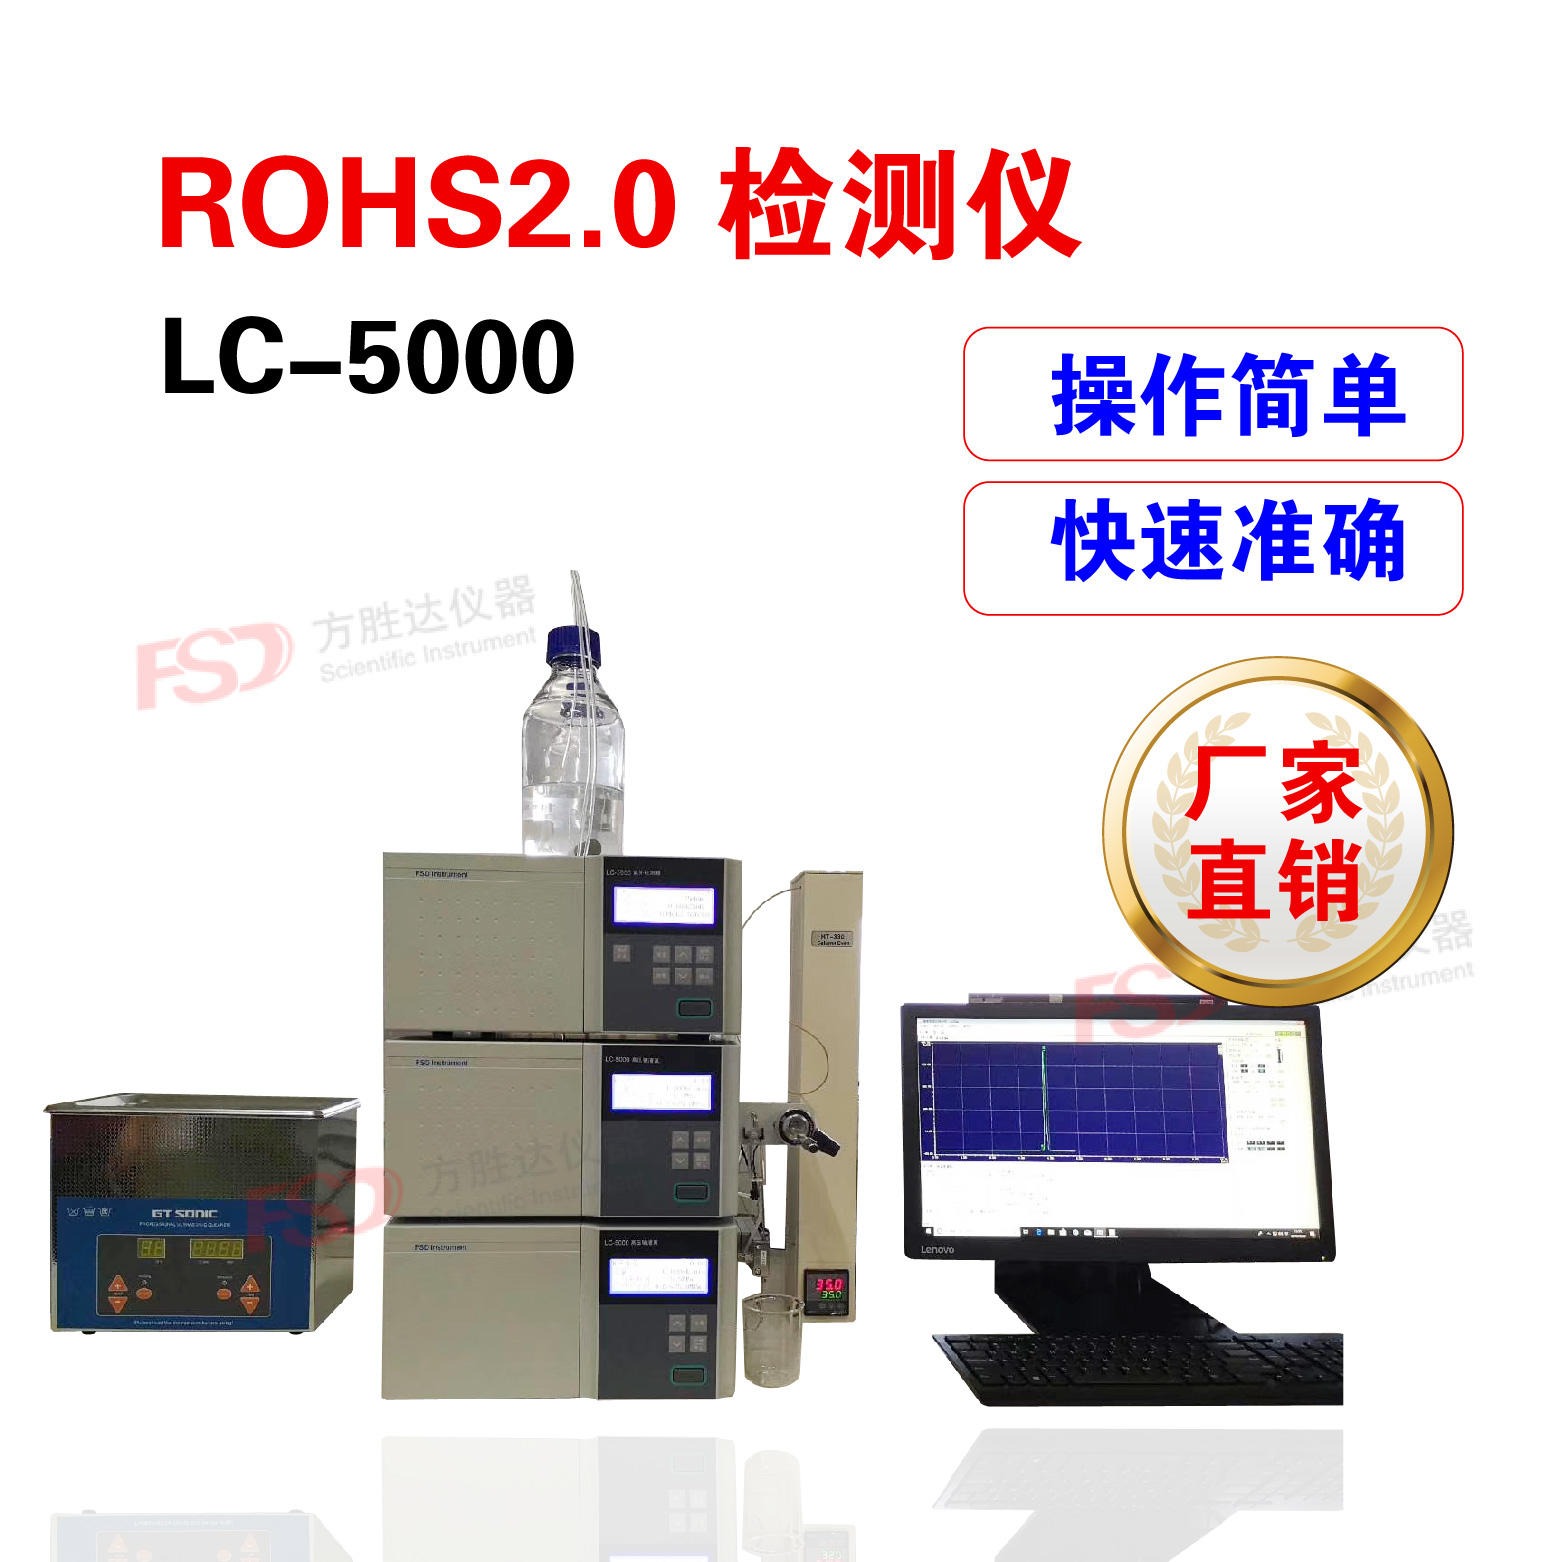 ROHS2.0检测仪LC-5000厂家现货